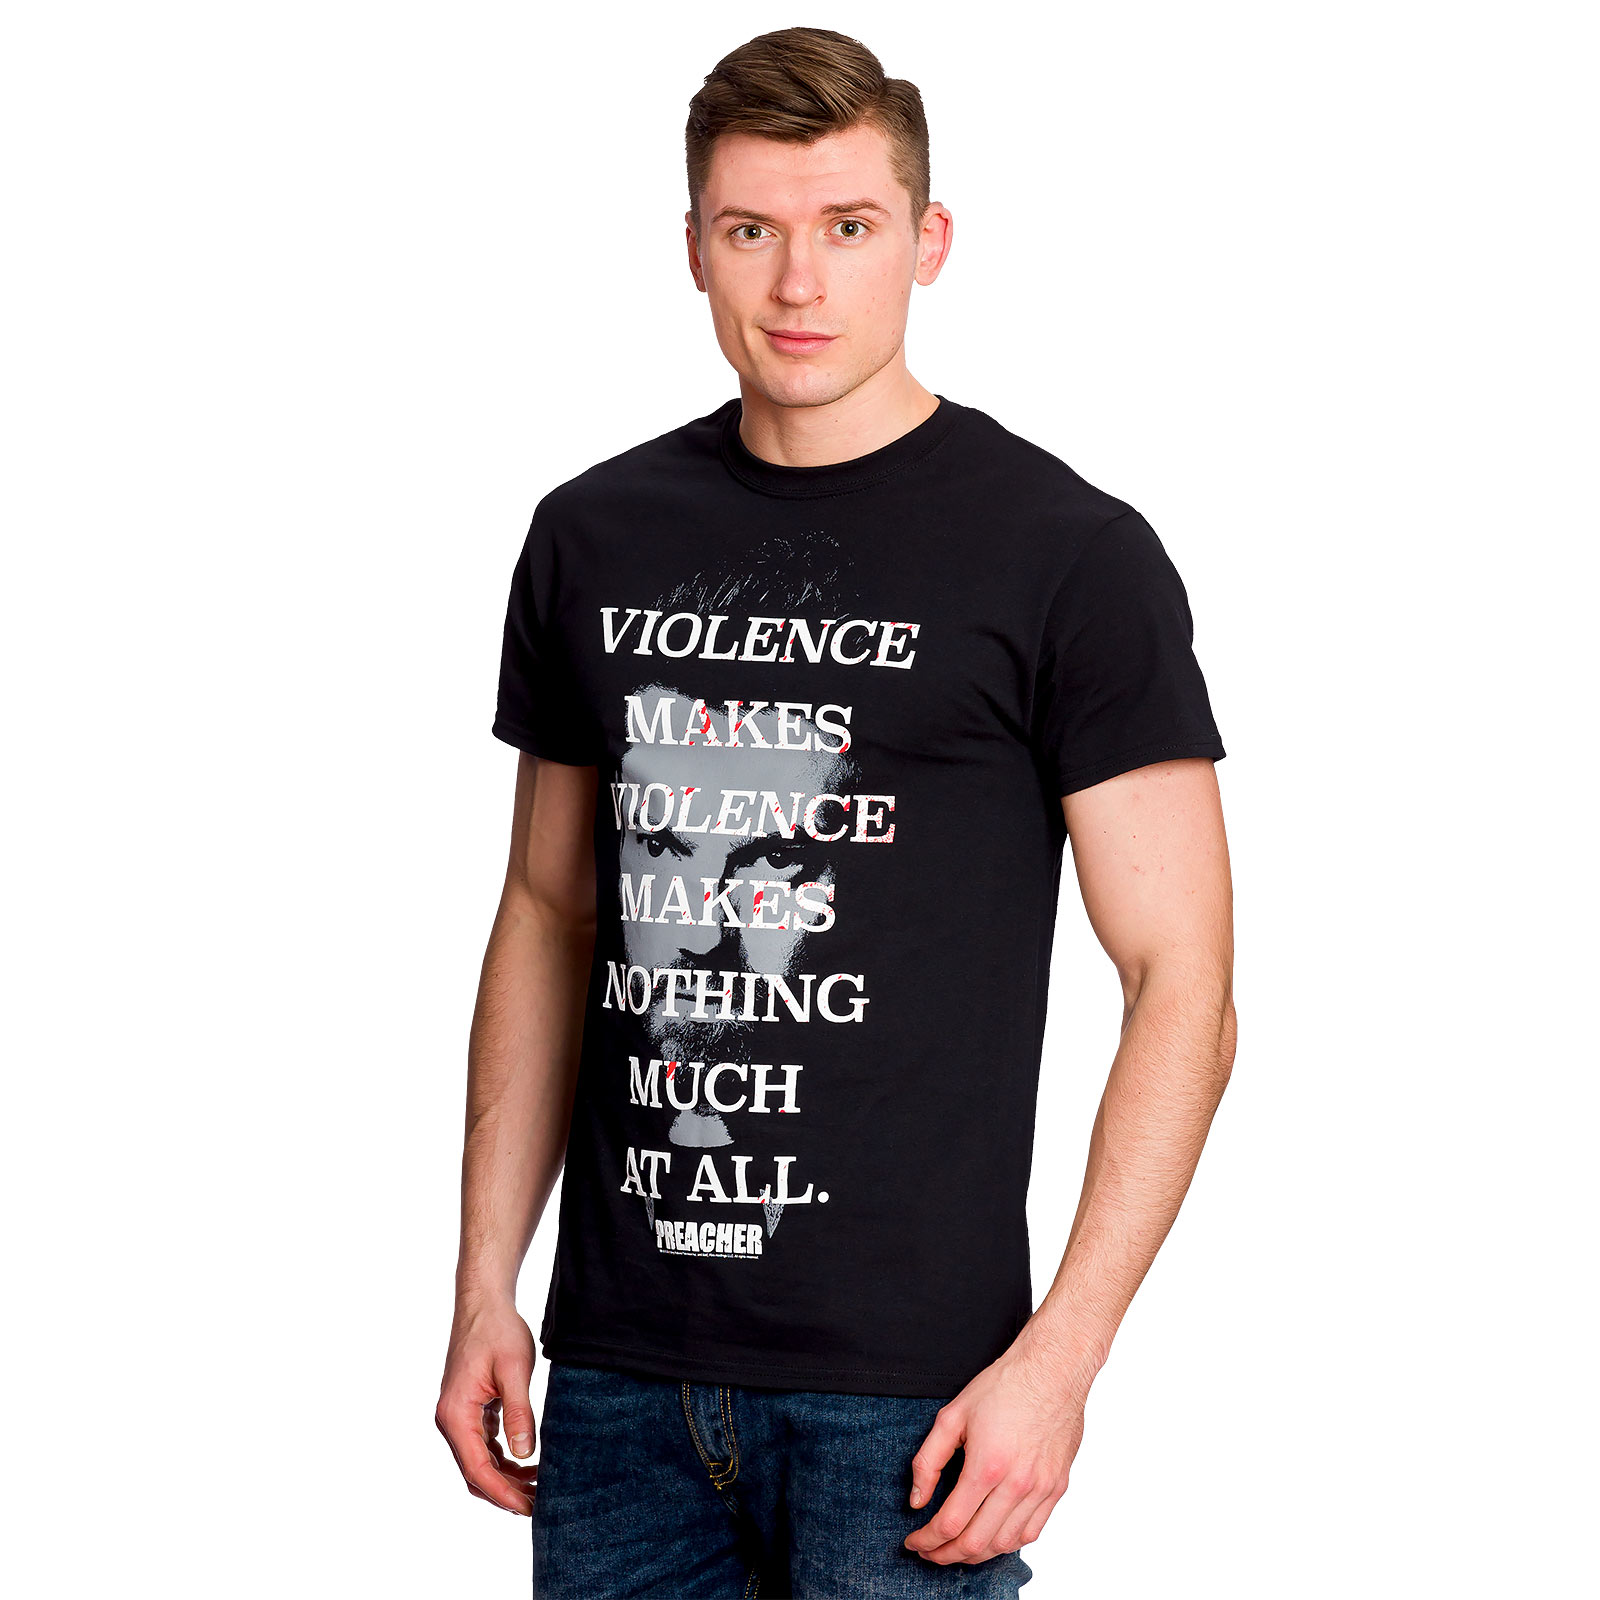 Preacher - Violence Makes Violence T-Shirt Black